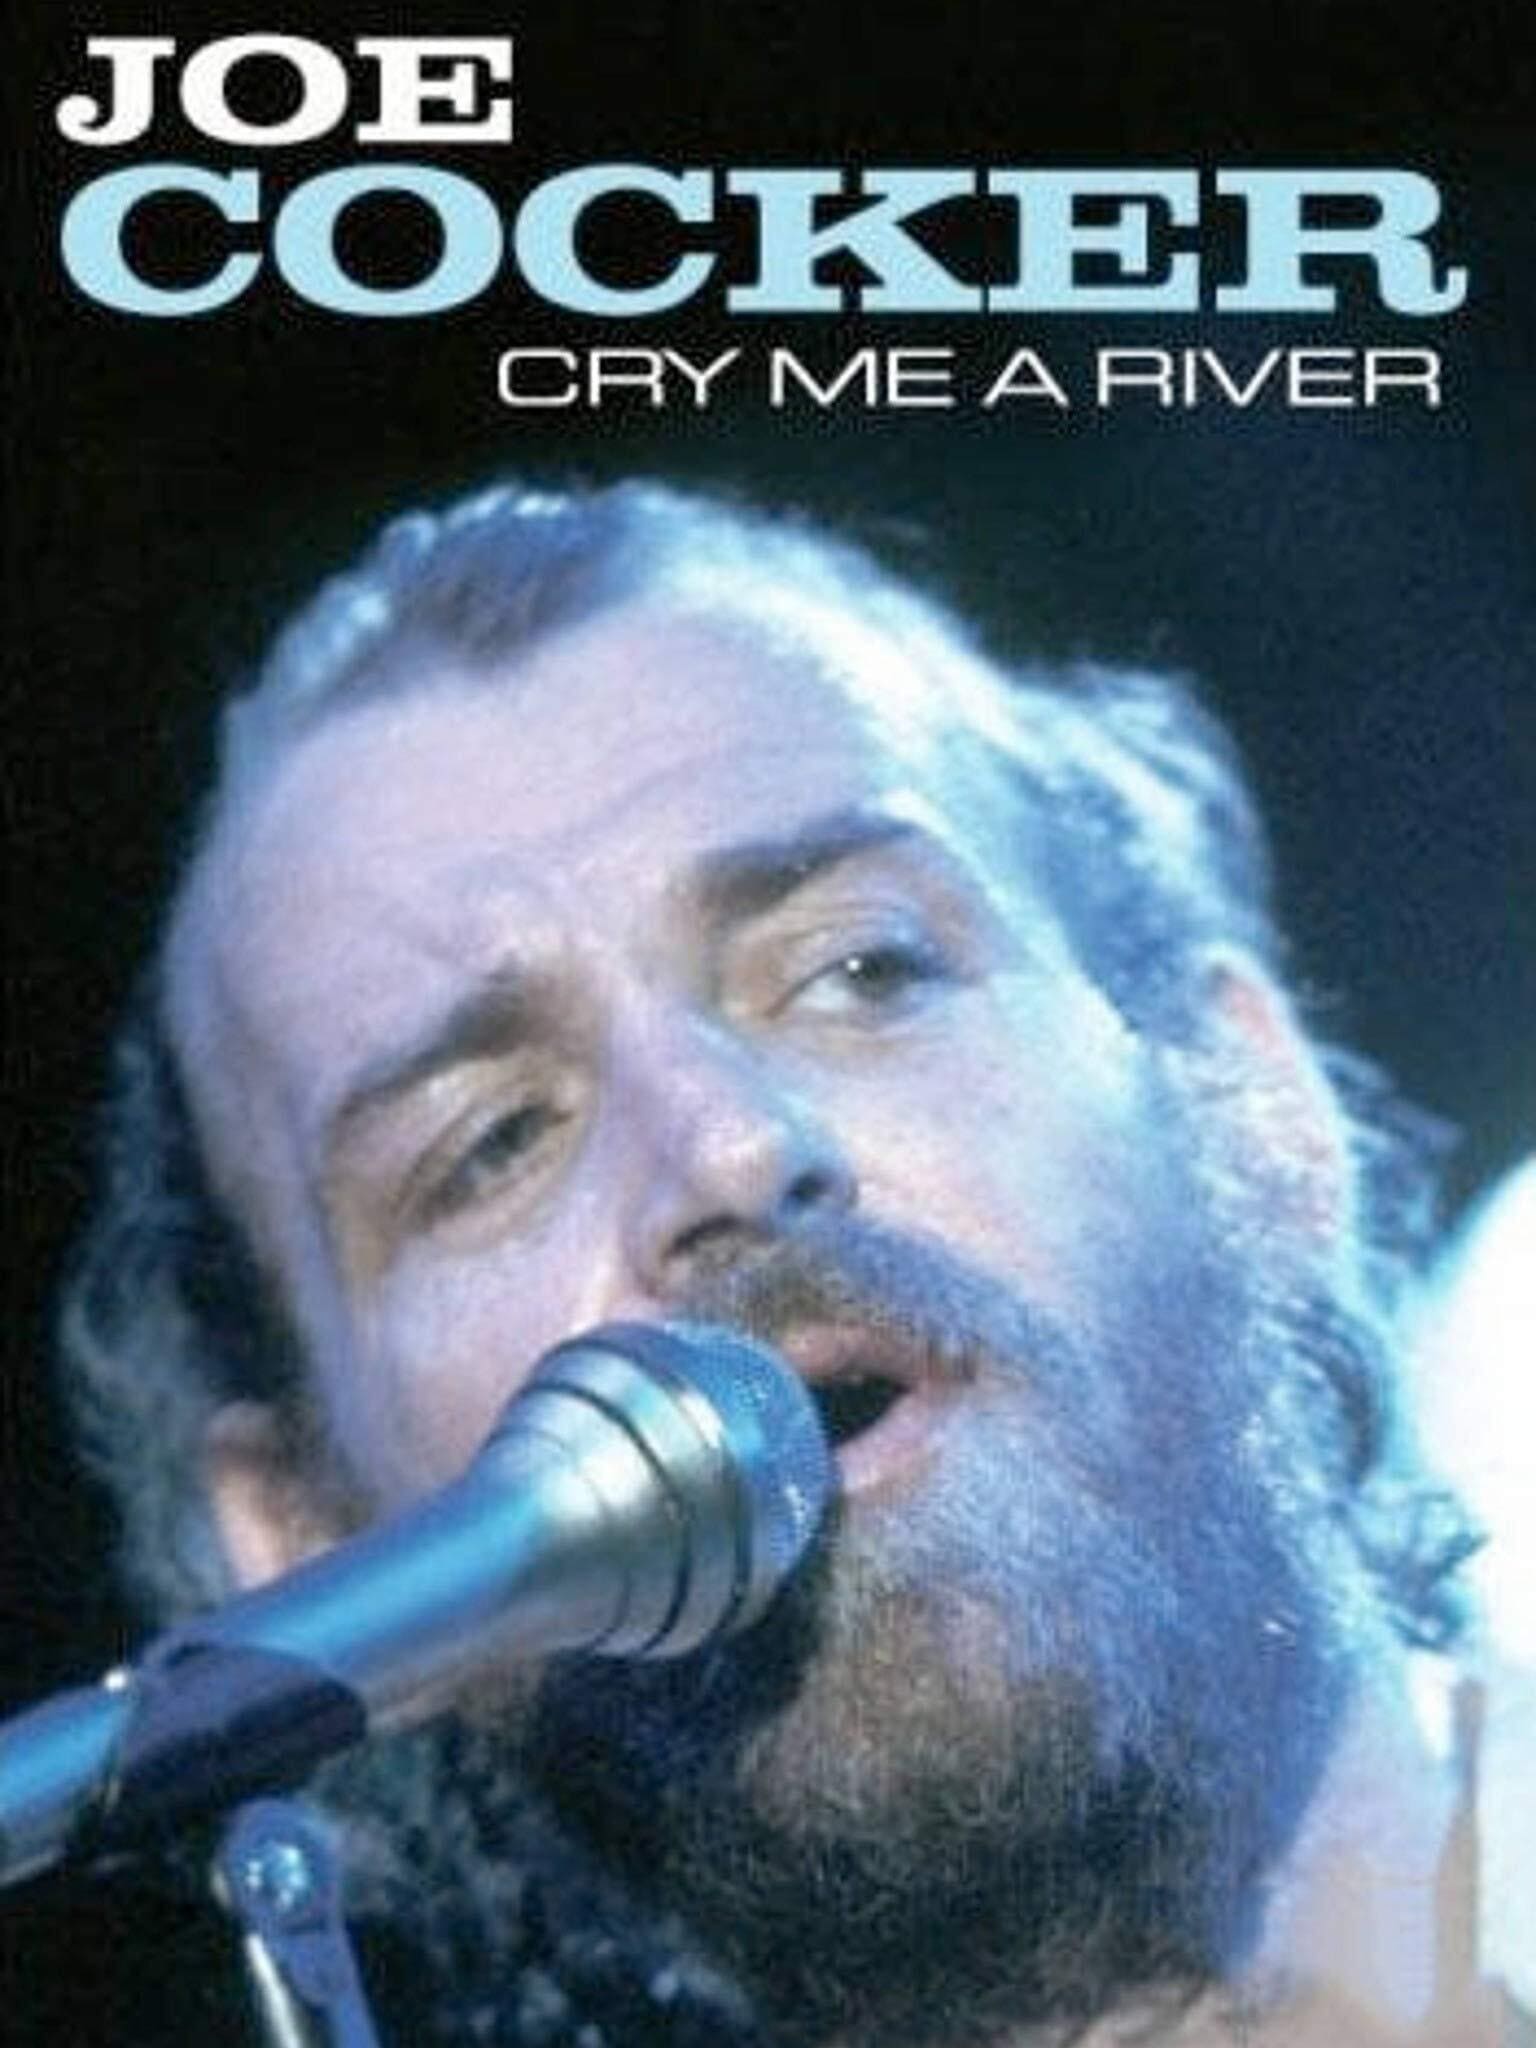 Joe Cocker - Cry Me a River